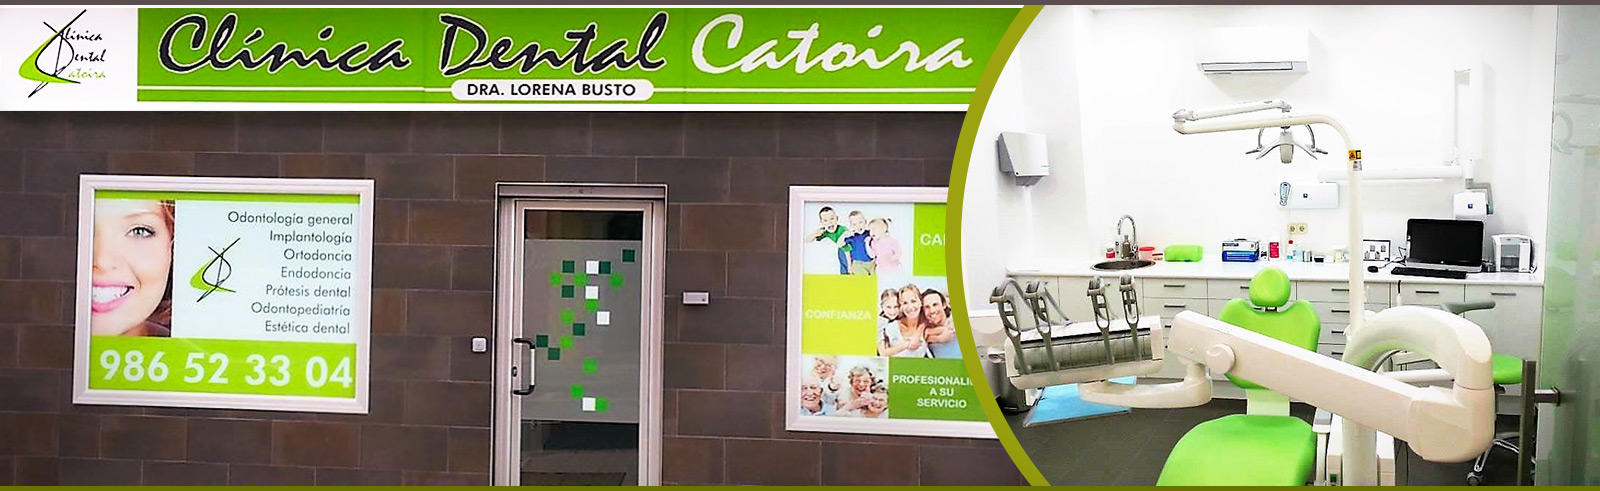 Images Clínica Dental Catoira Dra. Lorena Busto